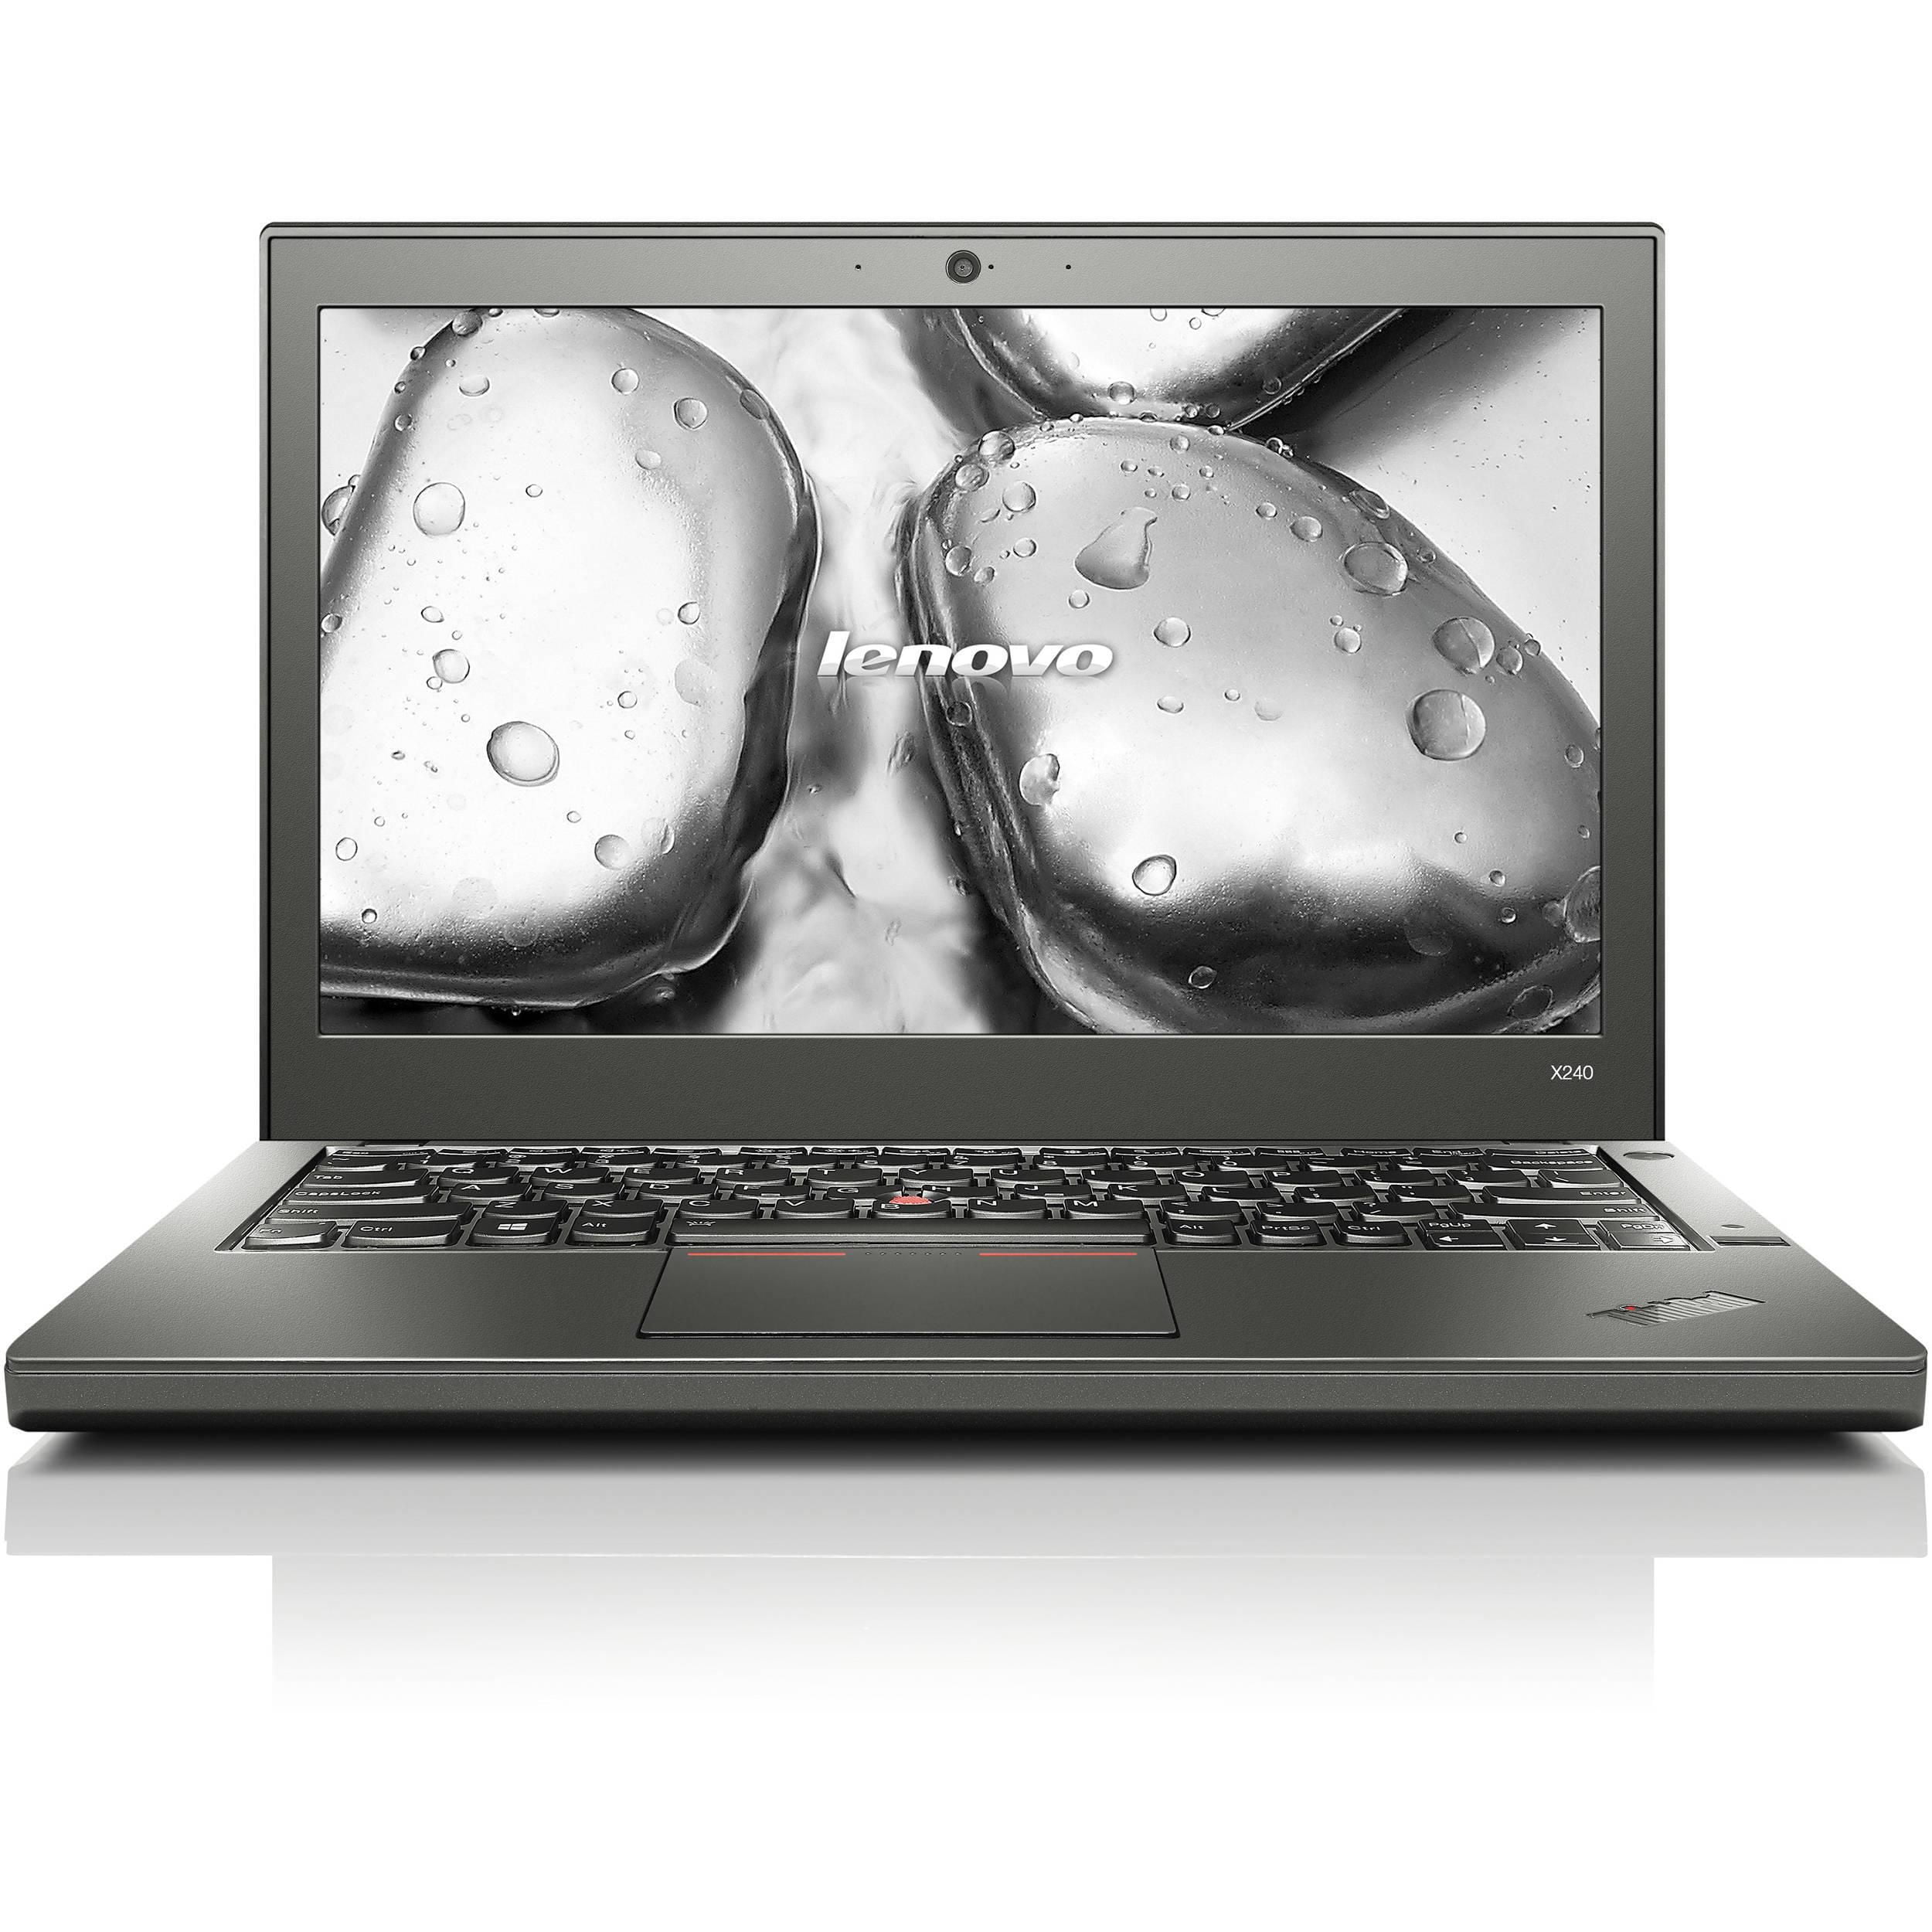 Lenovo Lenovo X240 Laptop Computer, 1.90 GHz Intel i5 Dual Core Gen 4, 4GB  DDR3 RAM, 128GB SSD Hard Drive, Windows 10 Home 64 Bit, 12